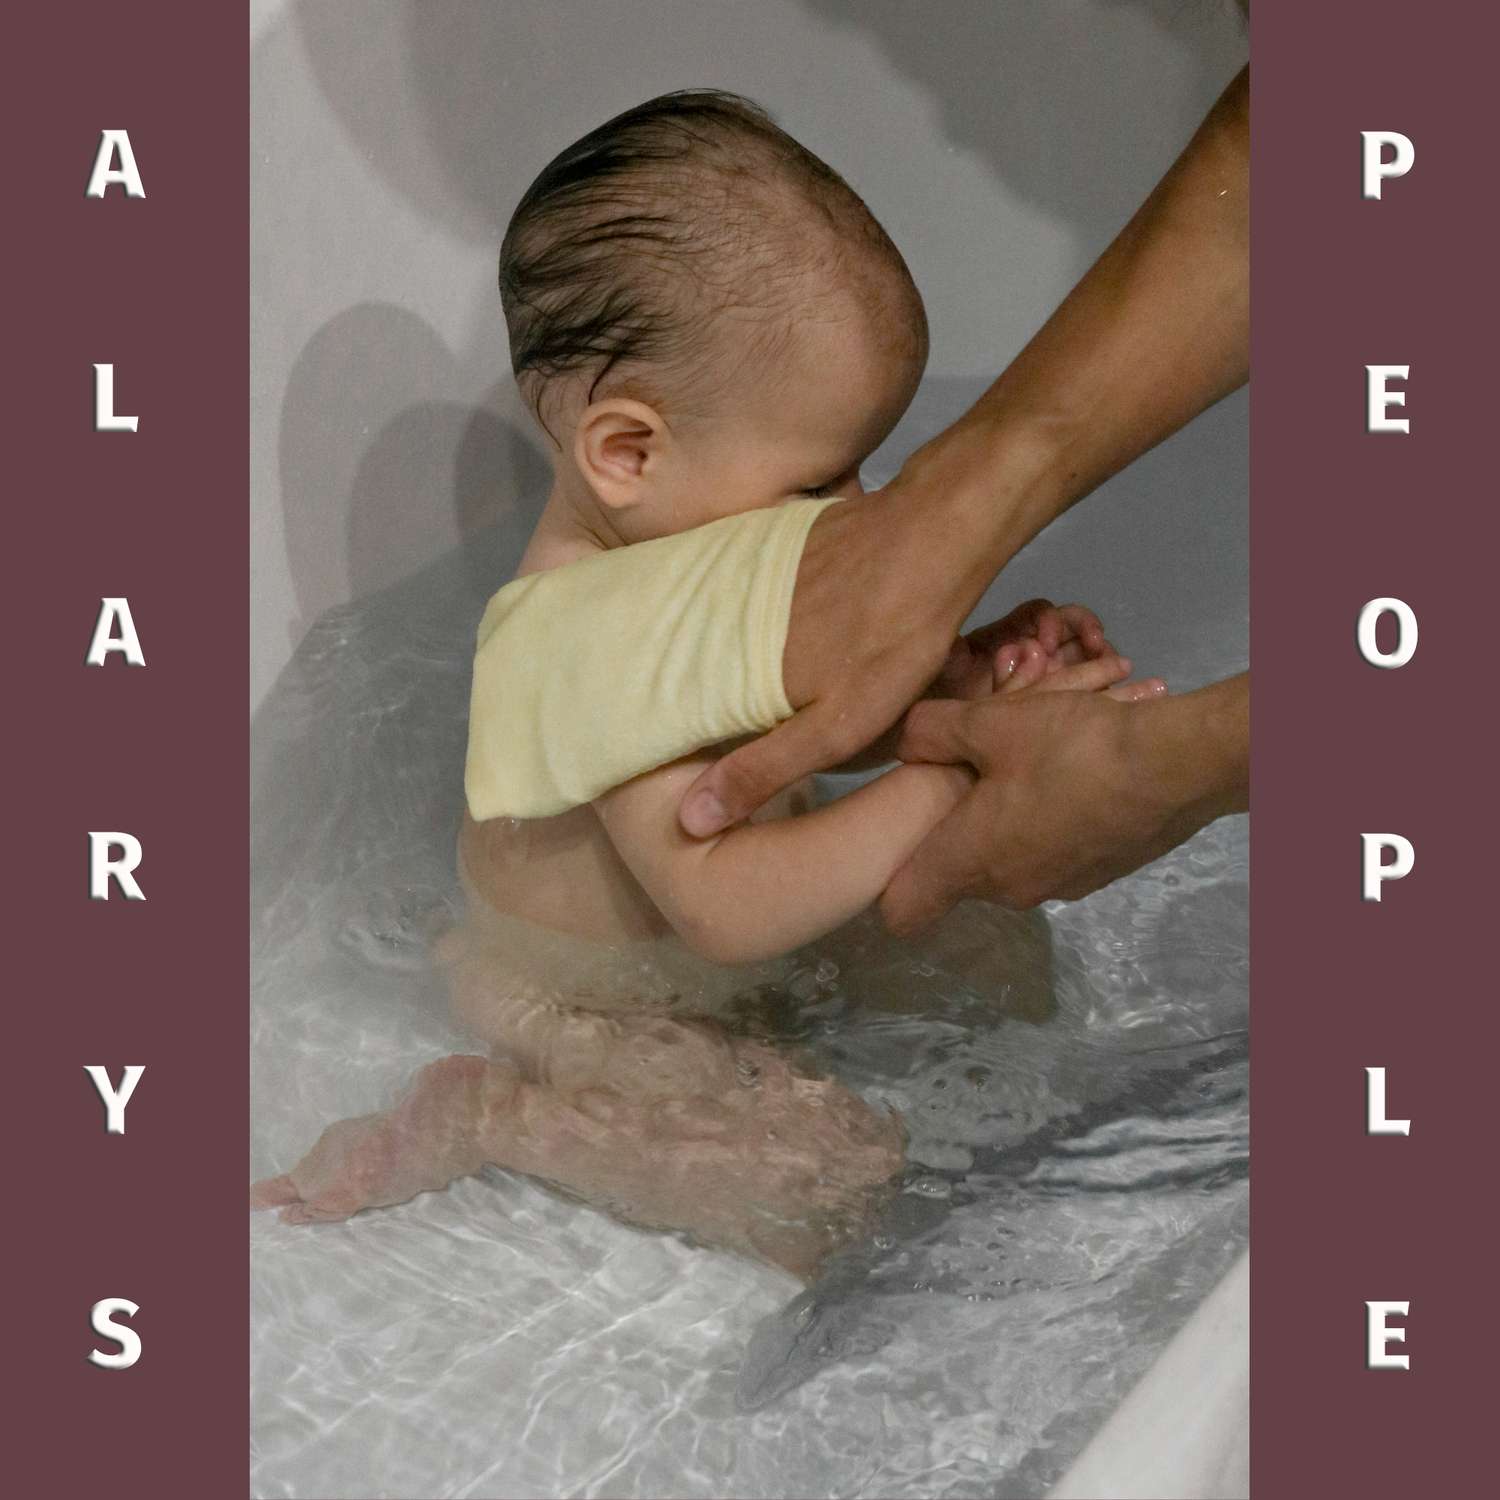 Набор для купания ALARYSPEOPLE пеленка-полотенце с уголком и рукавичка - фото 7